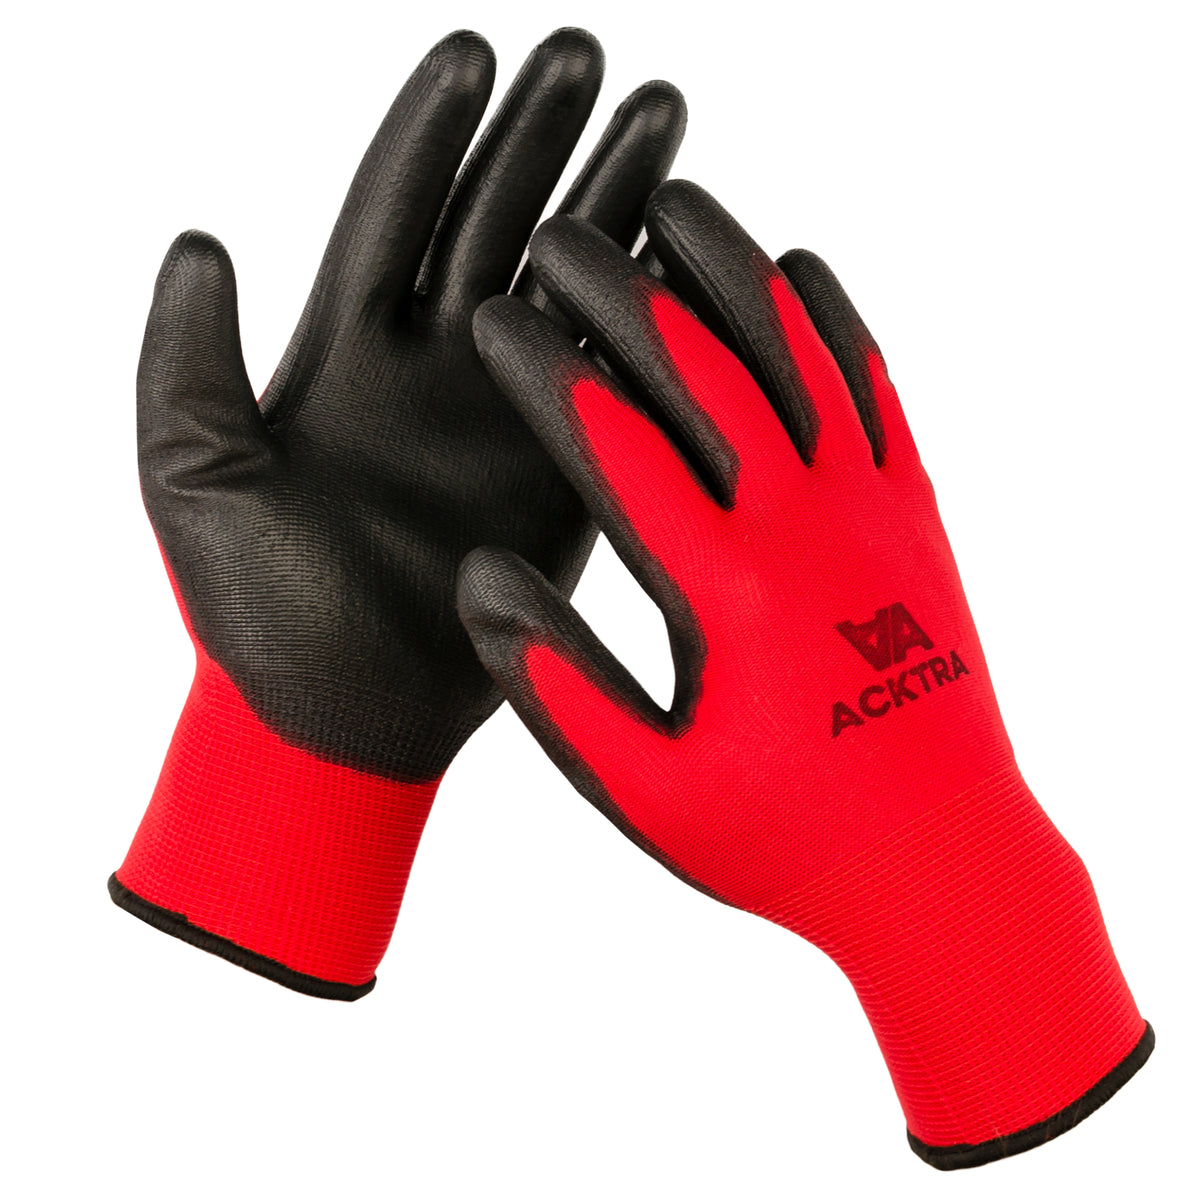 Black Pair Small UltraSource Polyurethane Coated Nylon Gloves 